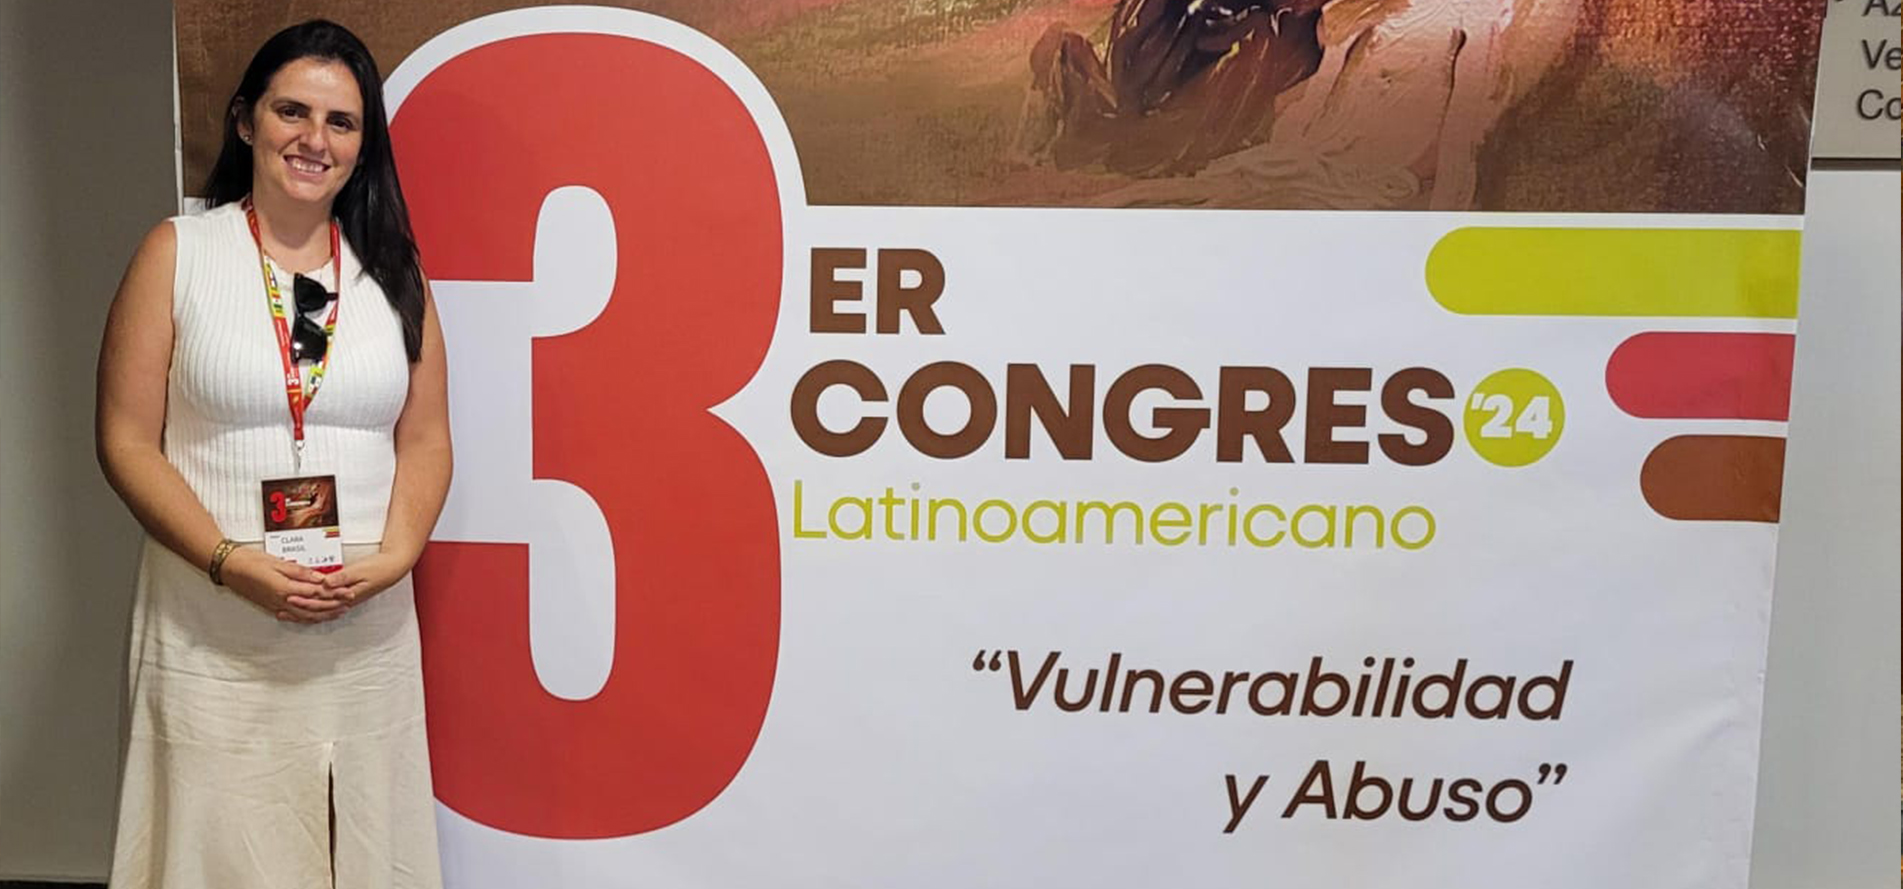 Coordenadora da Reconciliatio participa do  III Congresso Latino-americano do Ceprome